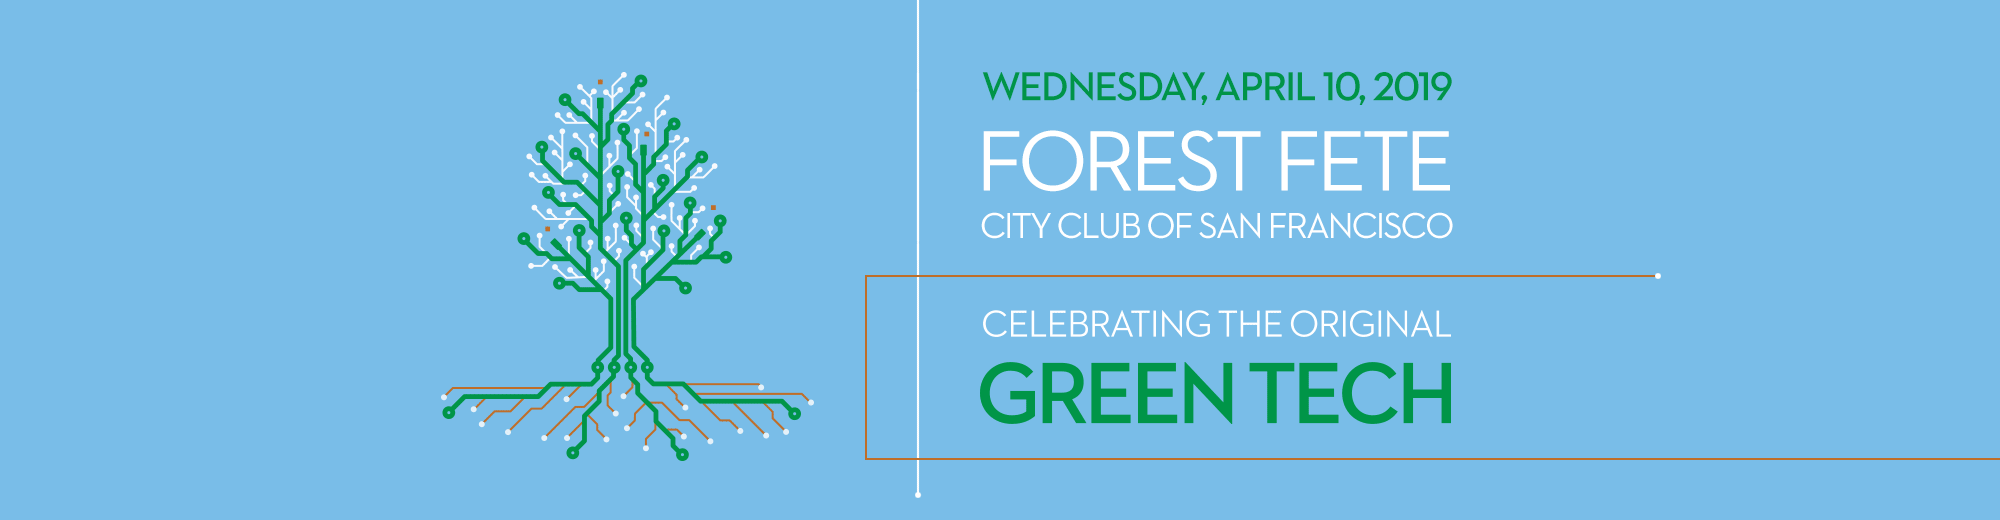 Forest Fete: Celebrating the Original Green Tech - April 10, 2019